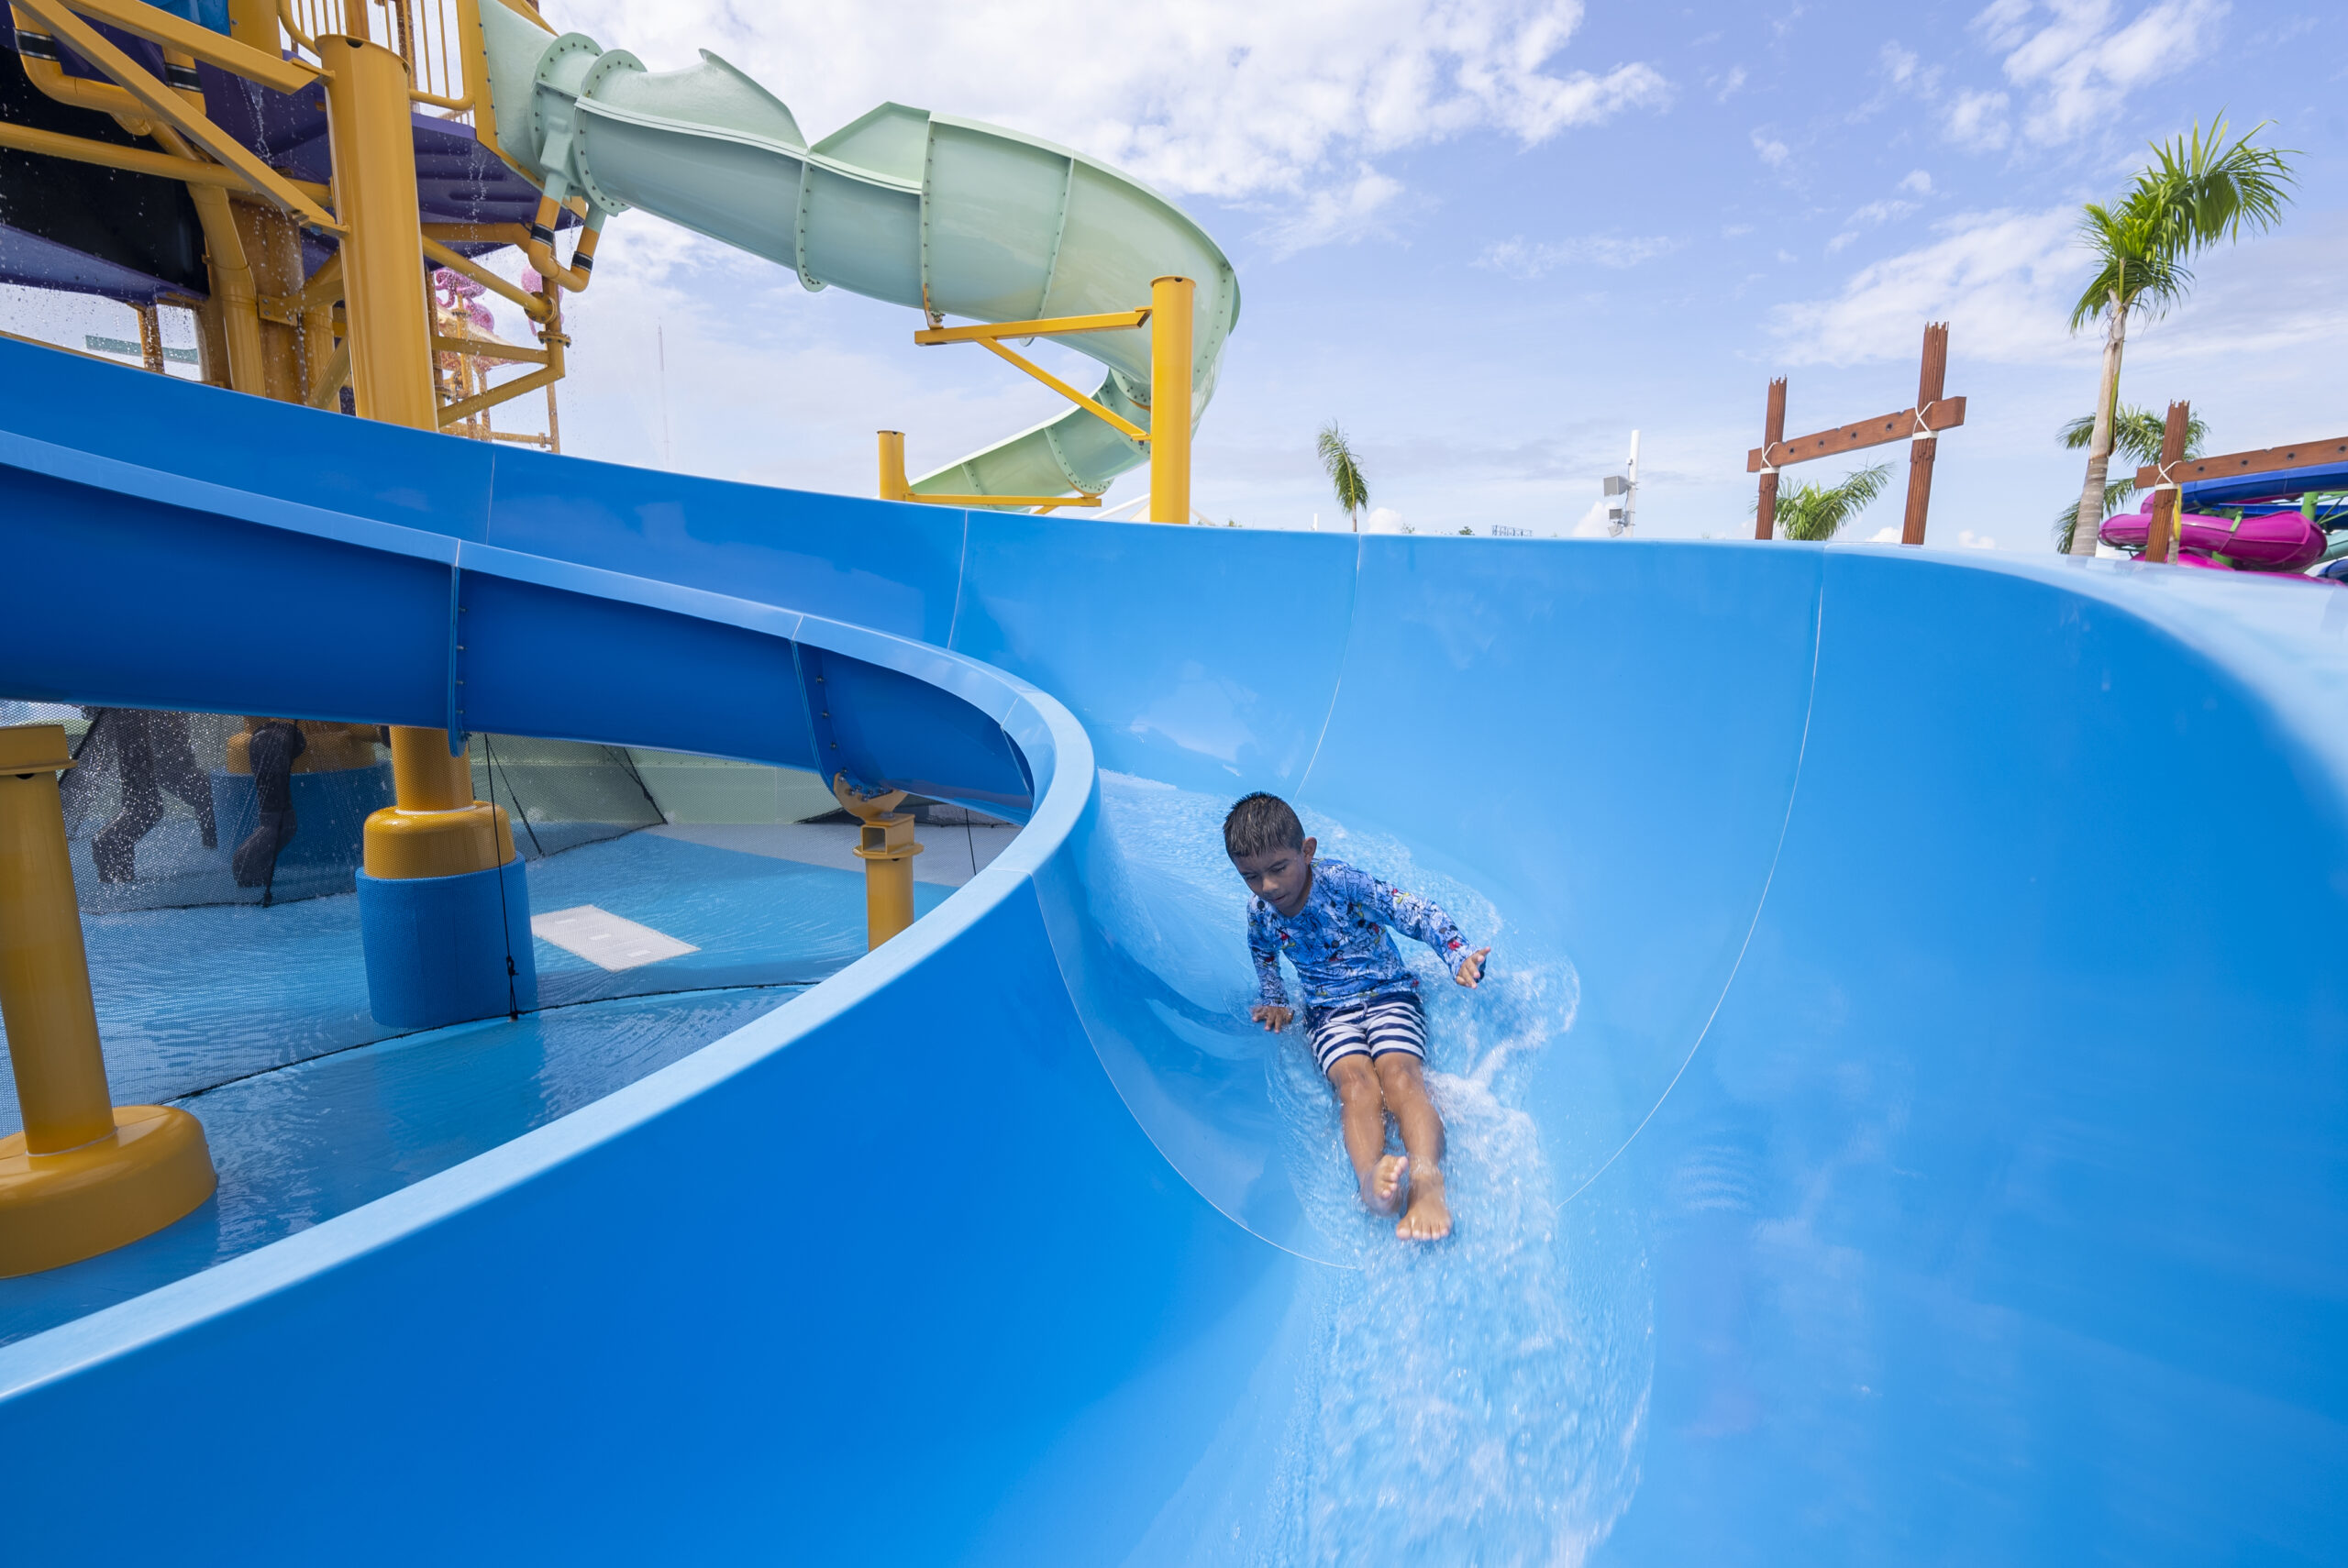 Six Flags Great Adventure Hurricane Harbor NJ Splash Island Slide